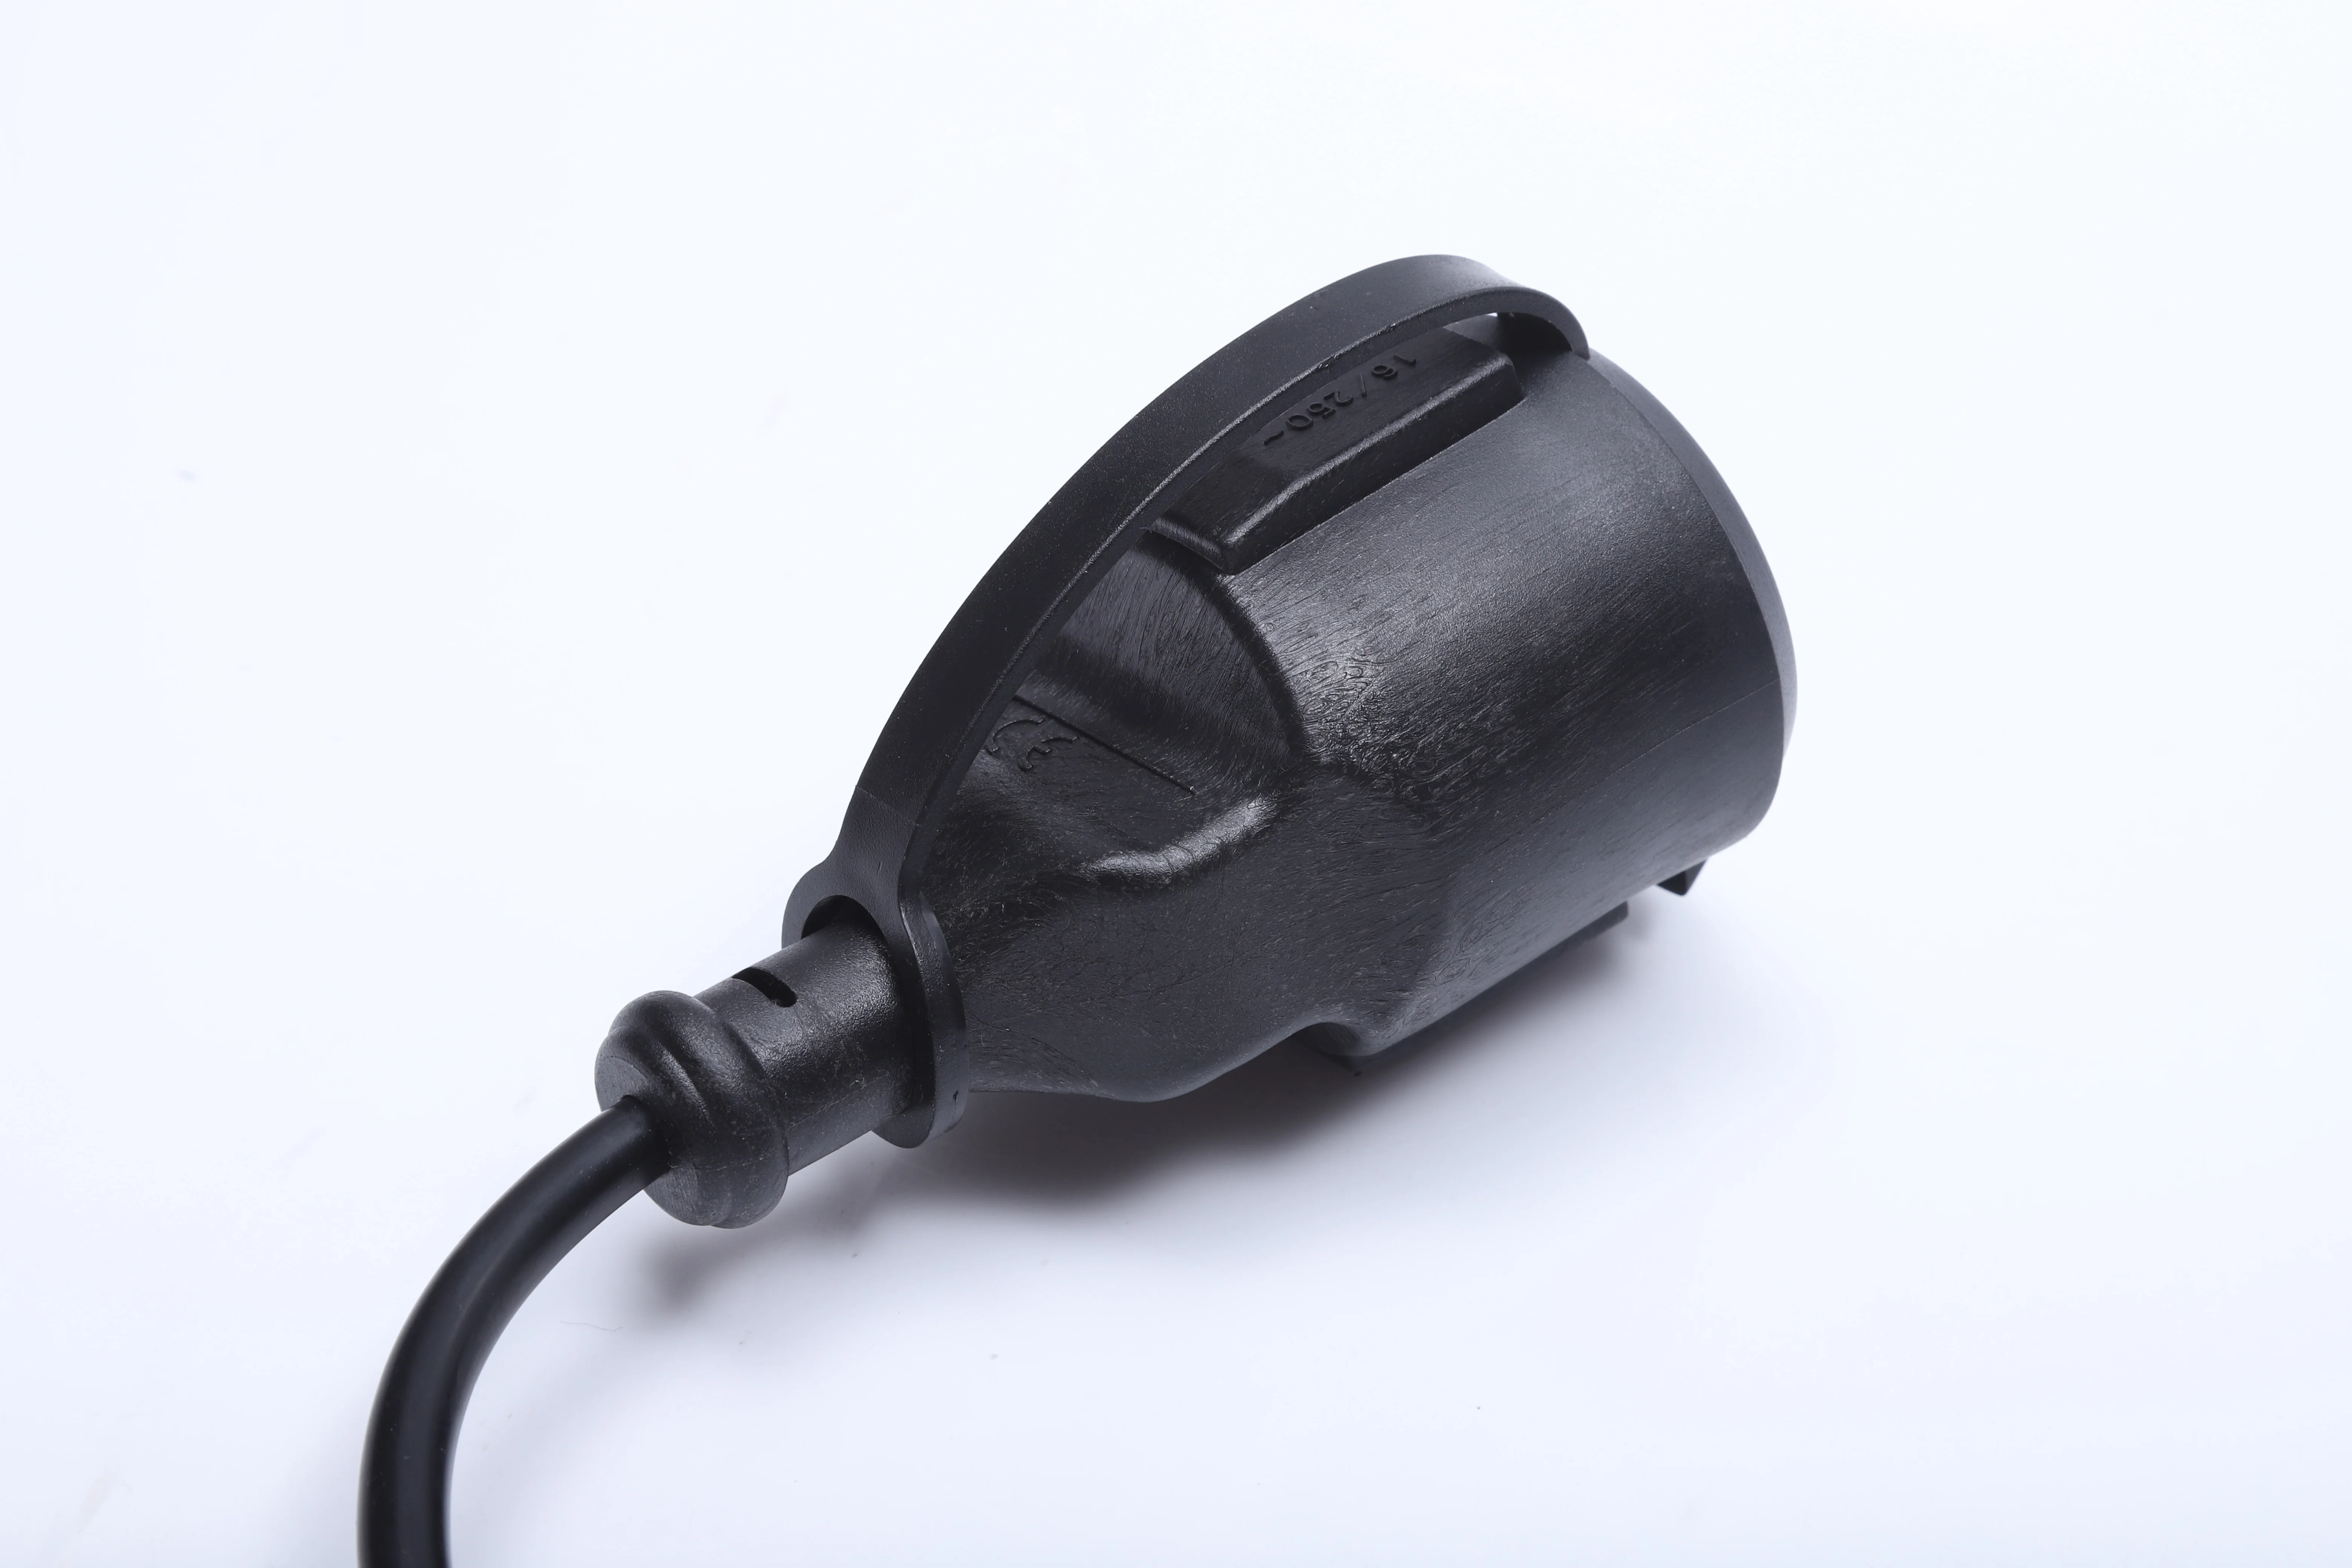 Connectable Eu-plug Round Black Cable Festoon Sring Light 230V Round Cable Plug